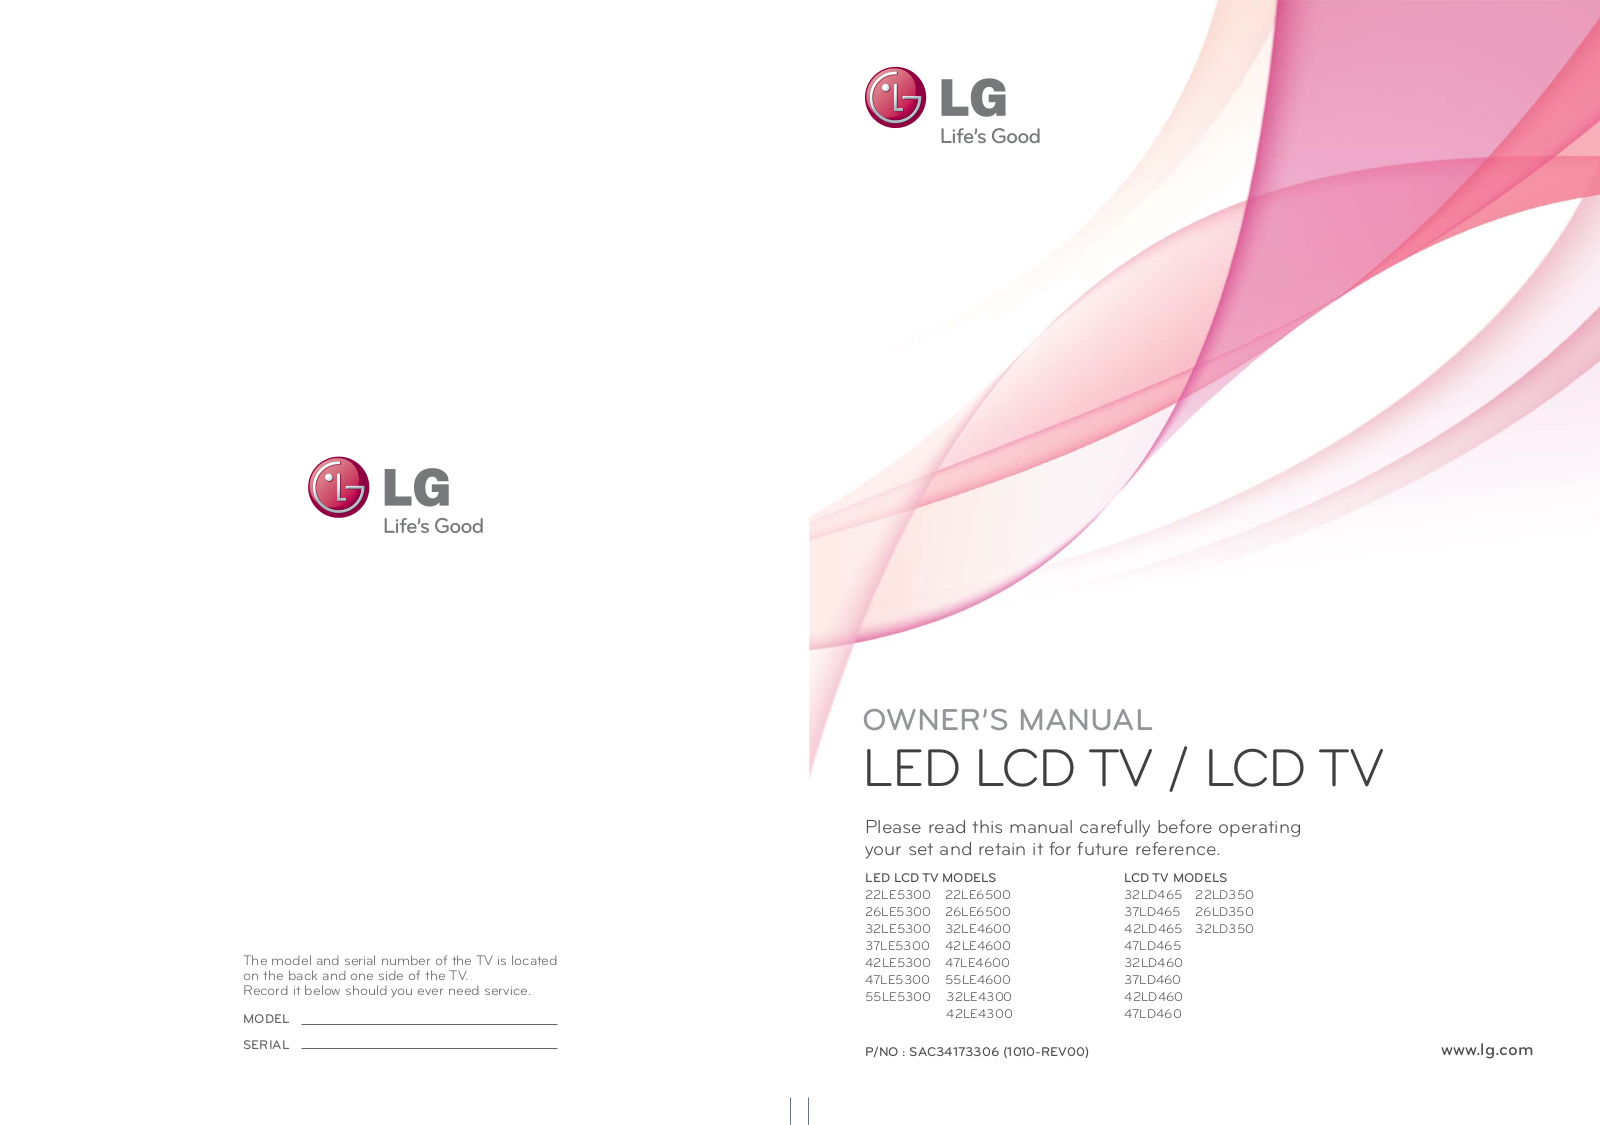 LG 26LD350, 22LD350, 42LD460, 32LD460, 42LD465 Owner's Manual